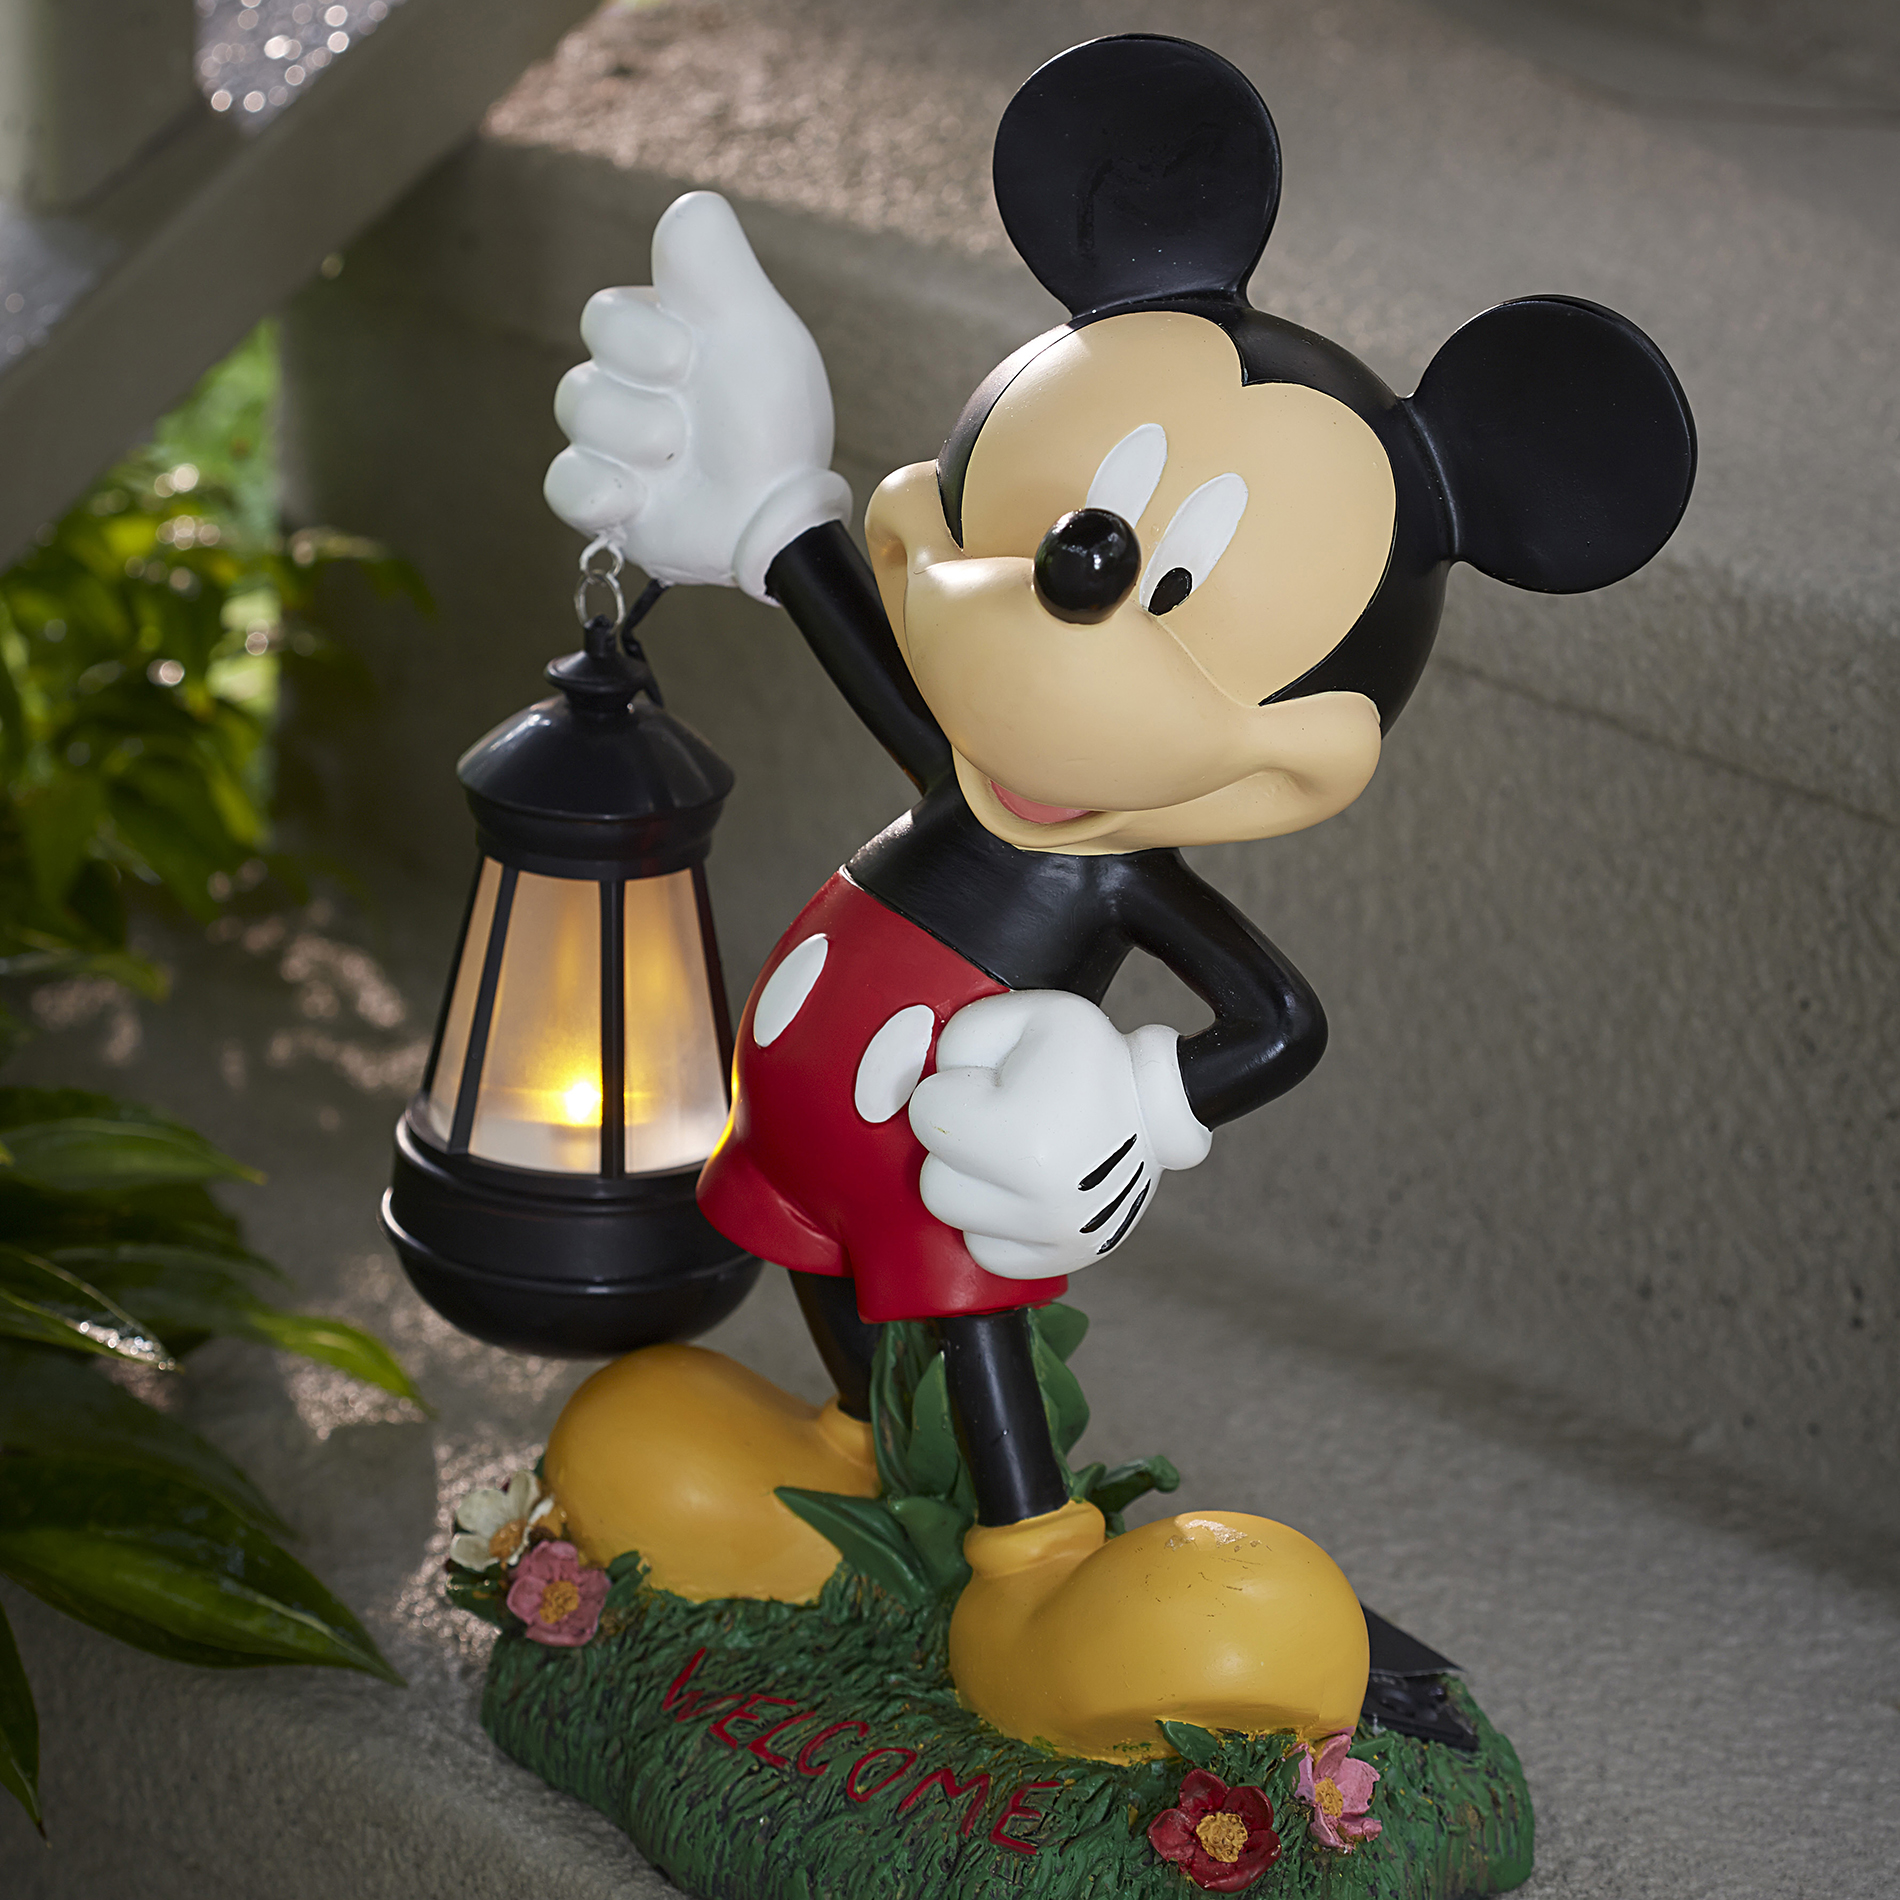 Disney Thumper Statue Outdoor Living Outdoor Decor Lawn Ornaments